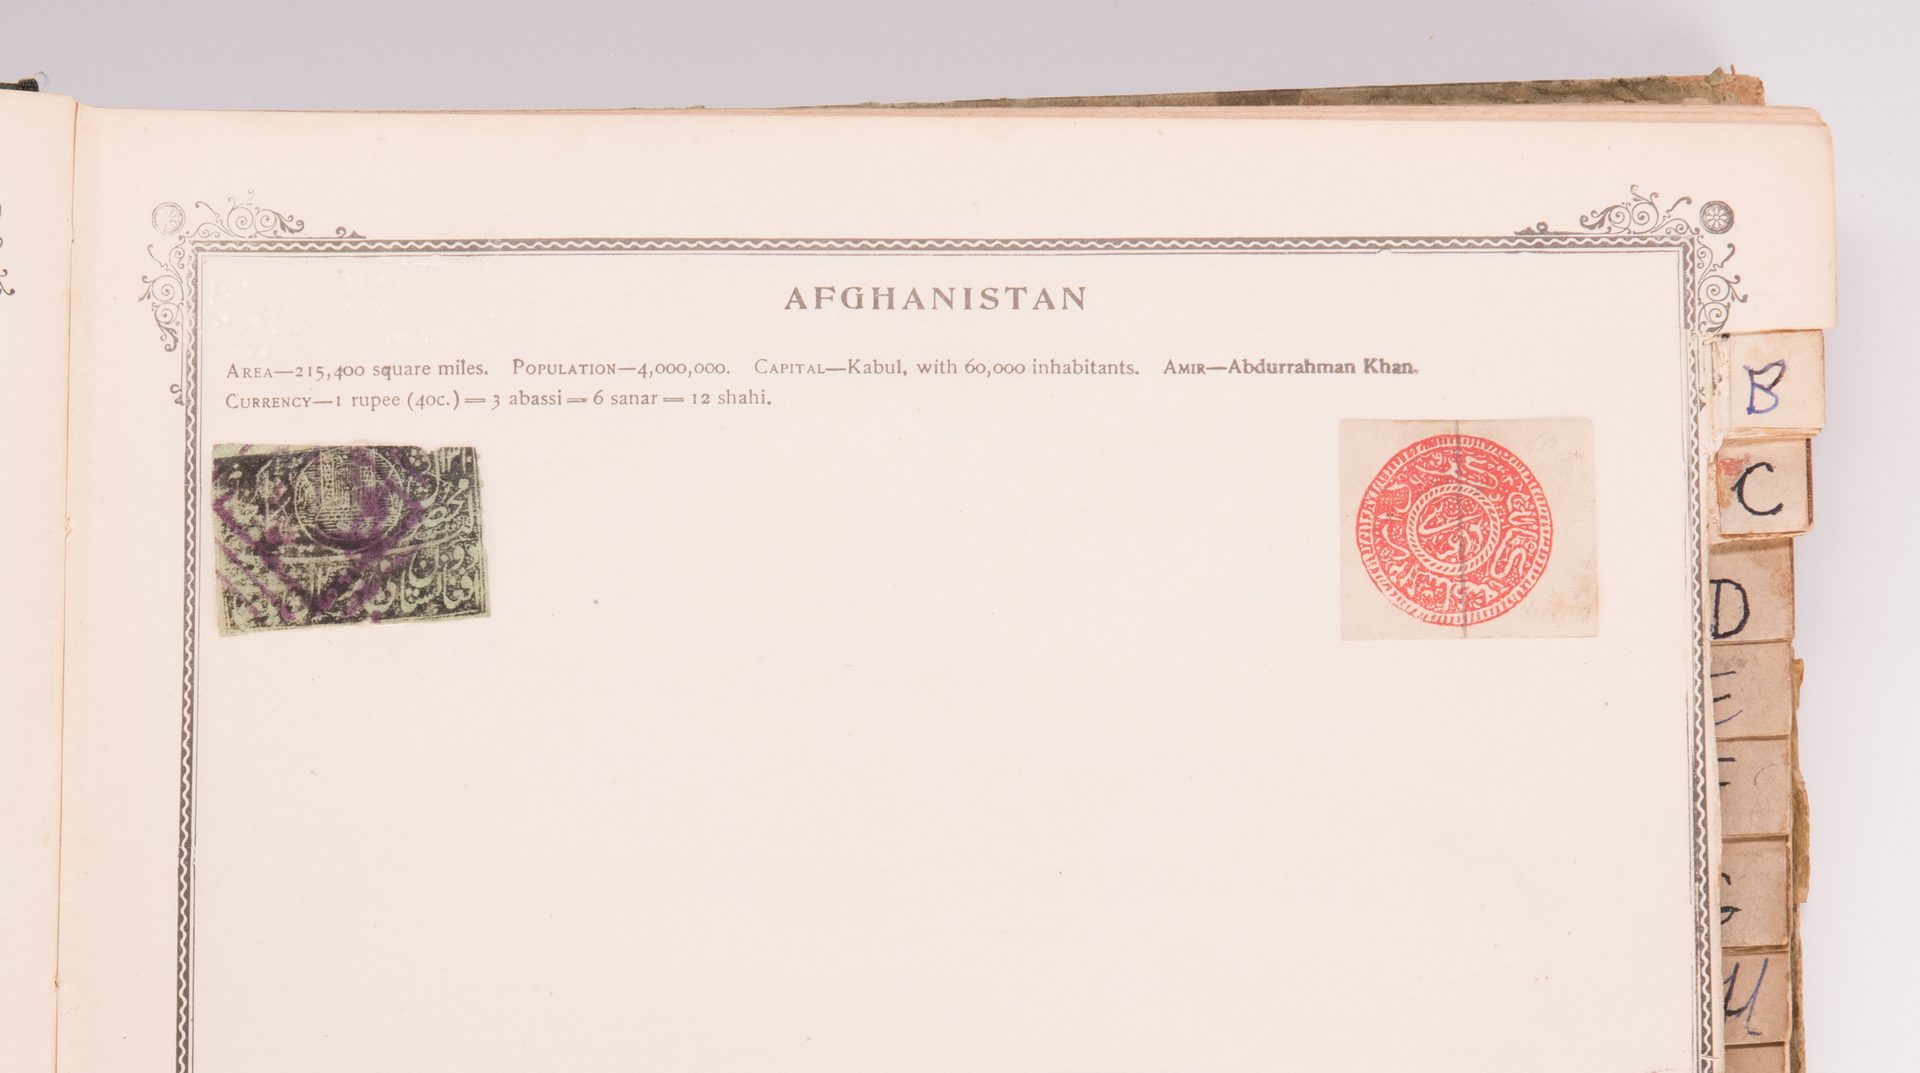 Lot 114: Scott's International Postage Stamp Album, 1902